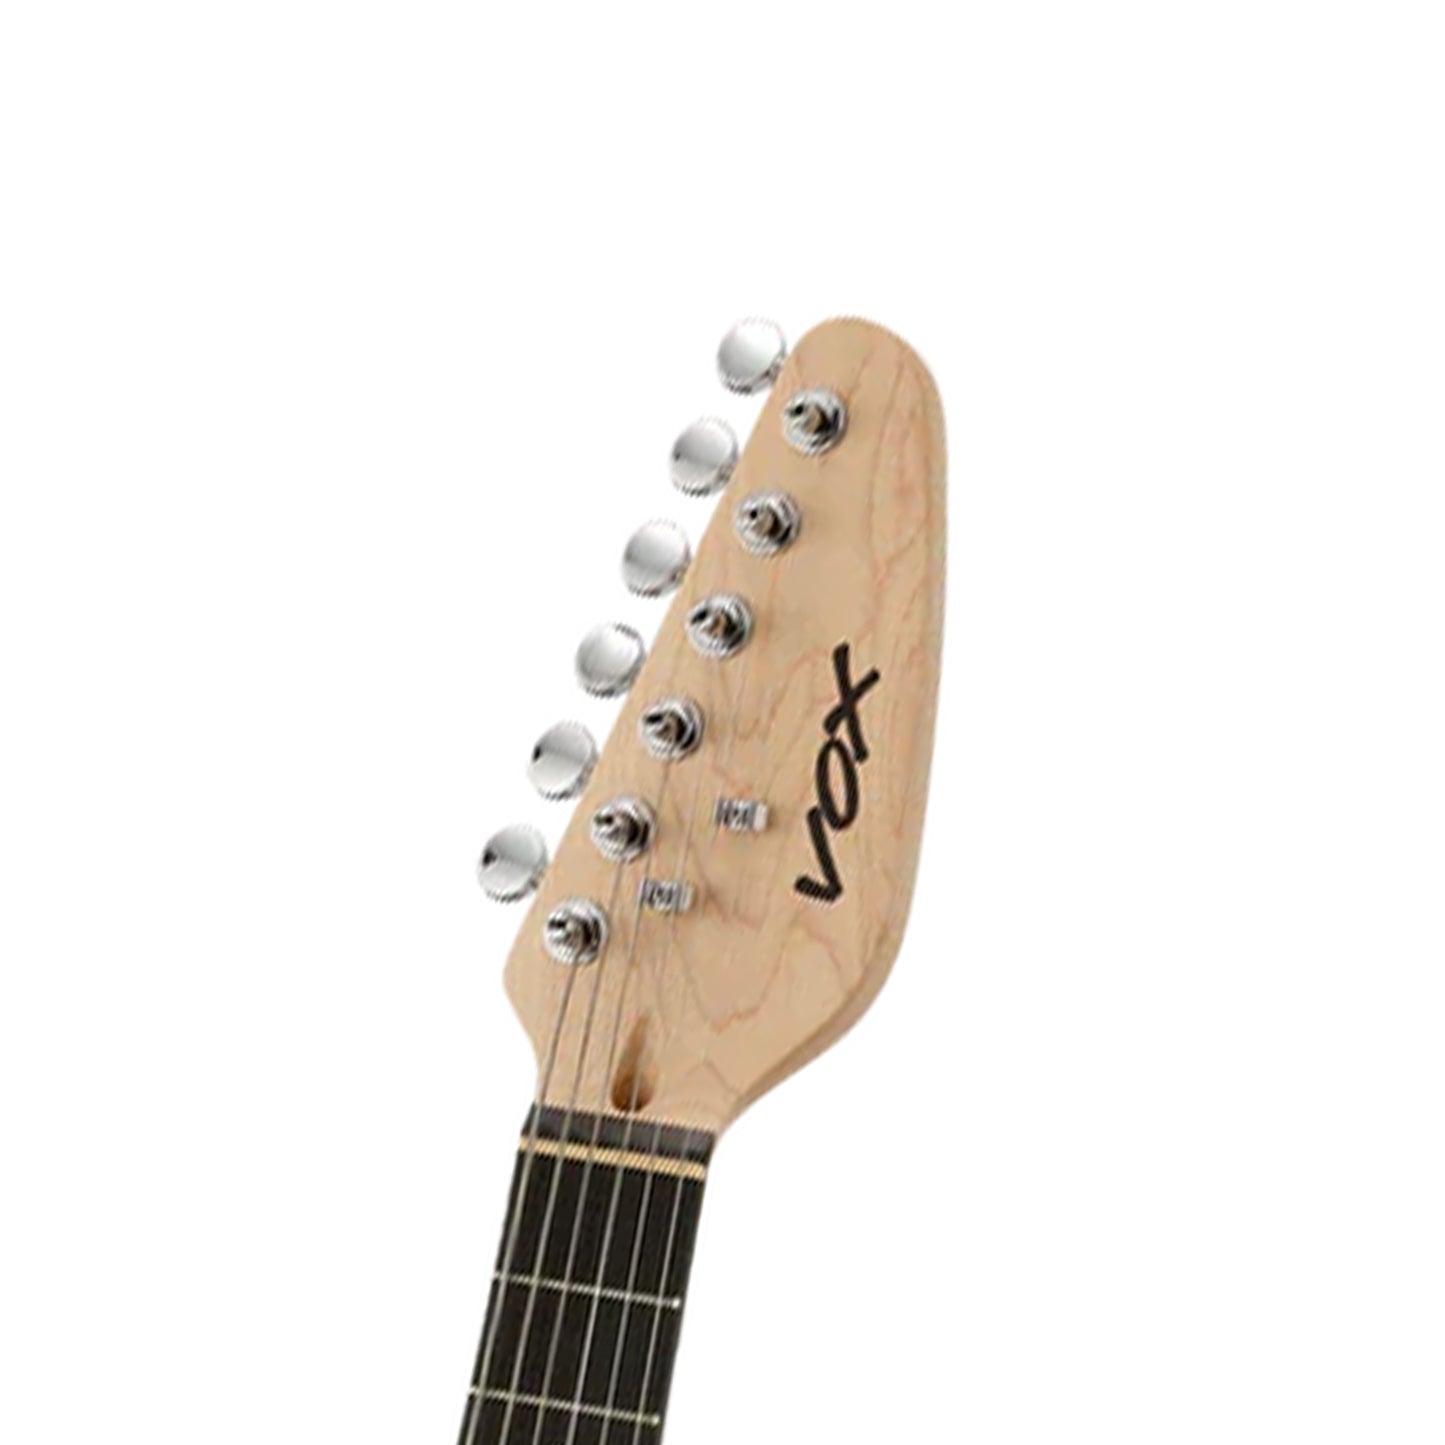 Vox Mark III Mini Teardrop Guitar Aqua Green